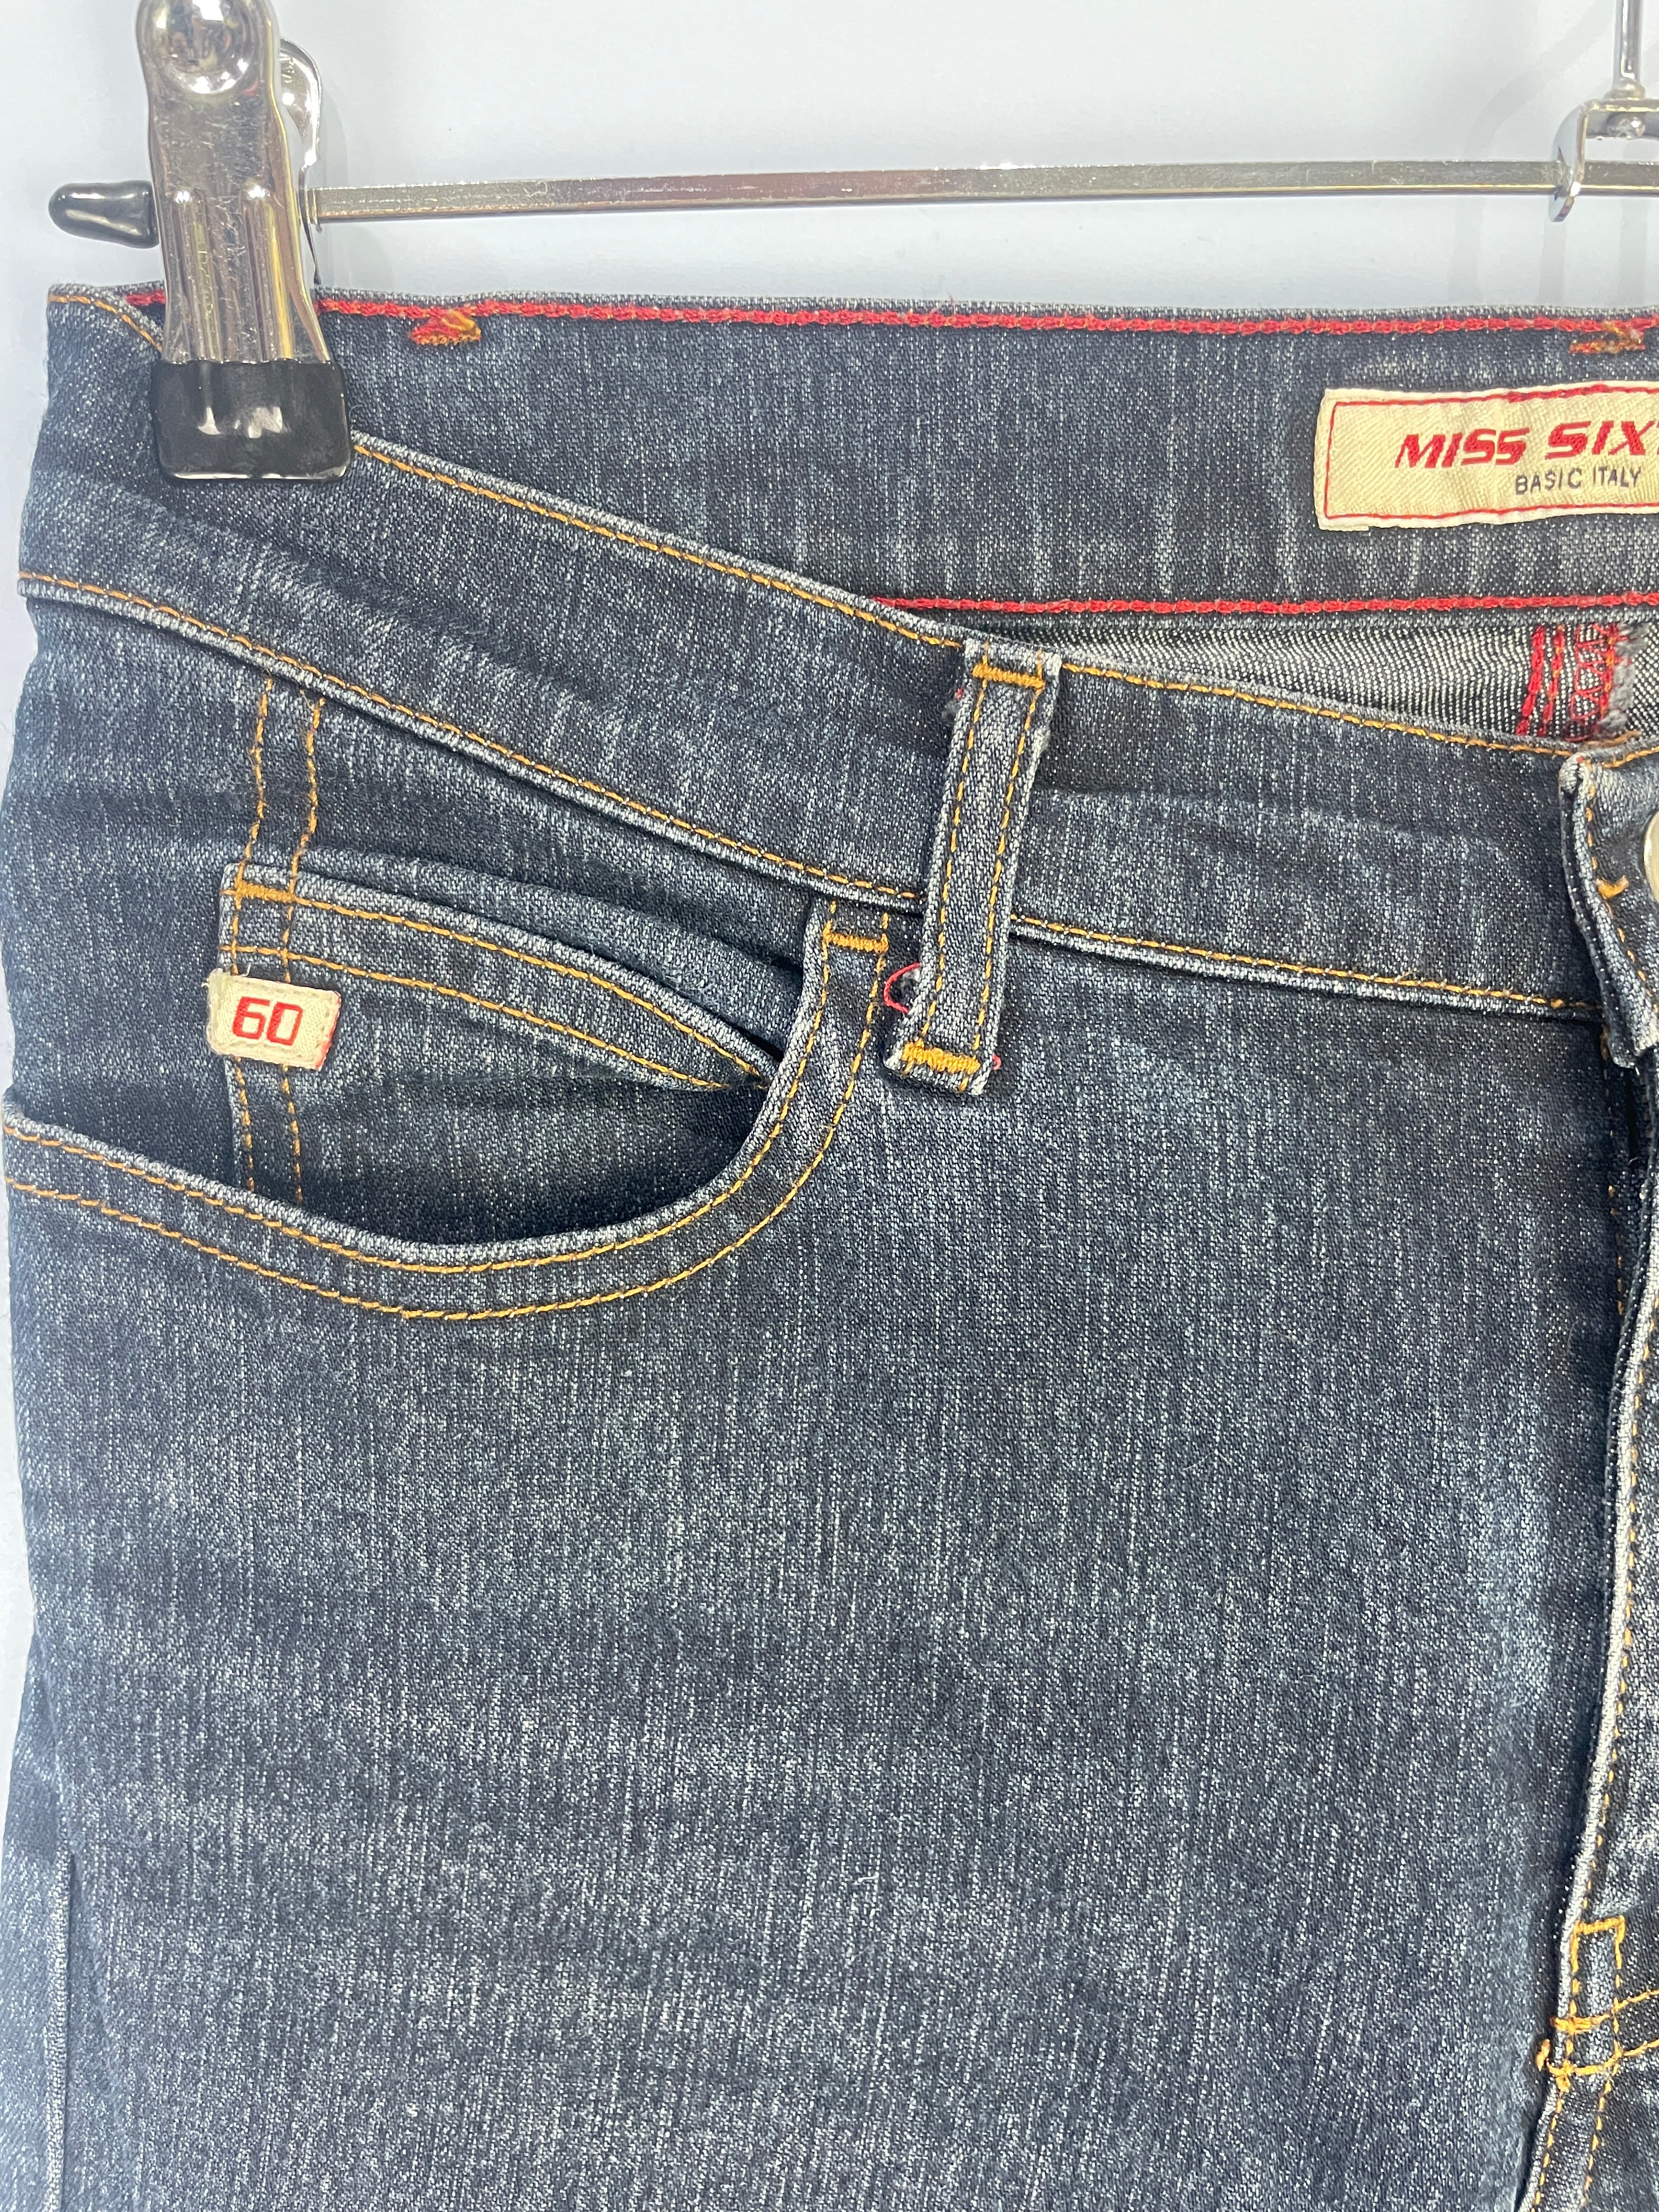 M Vintage low waist Miss Sixty Jeans